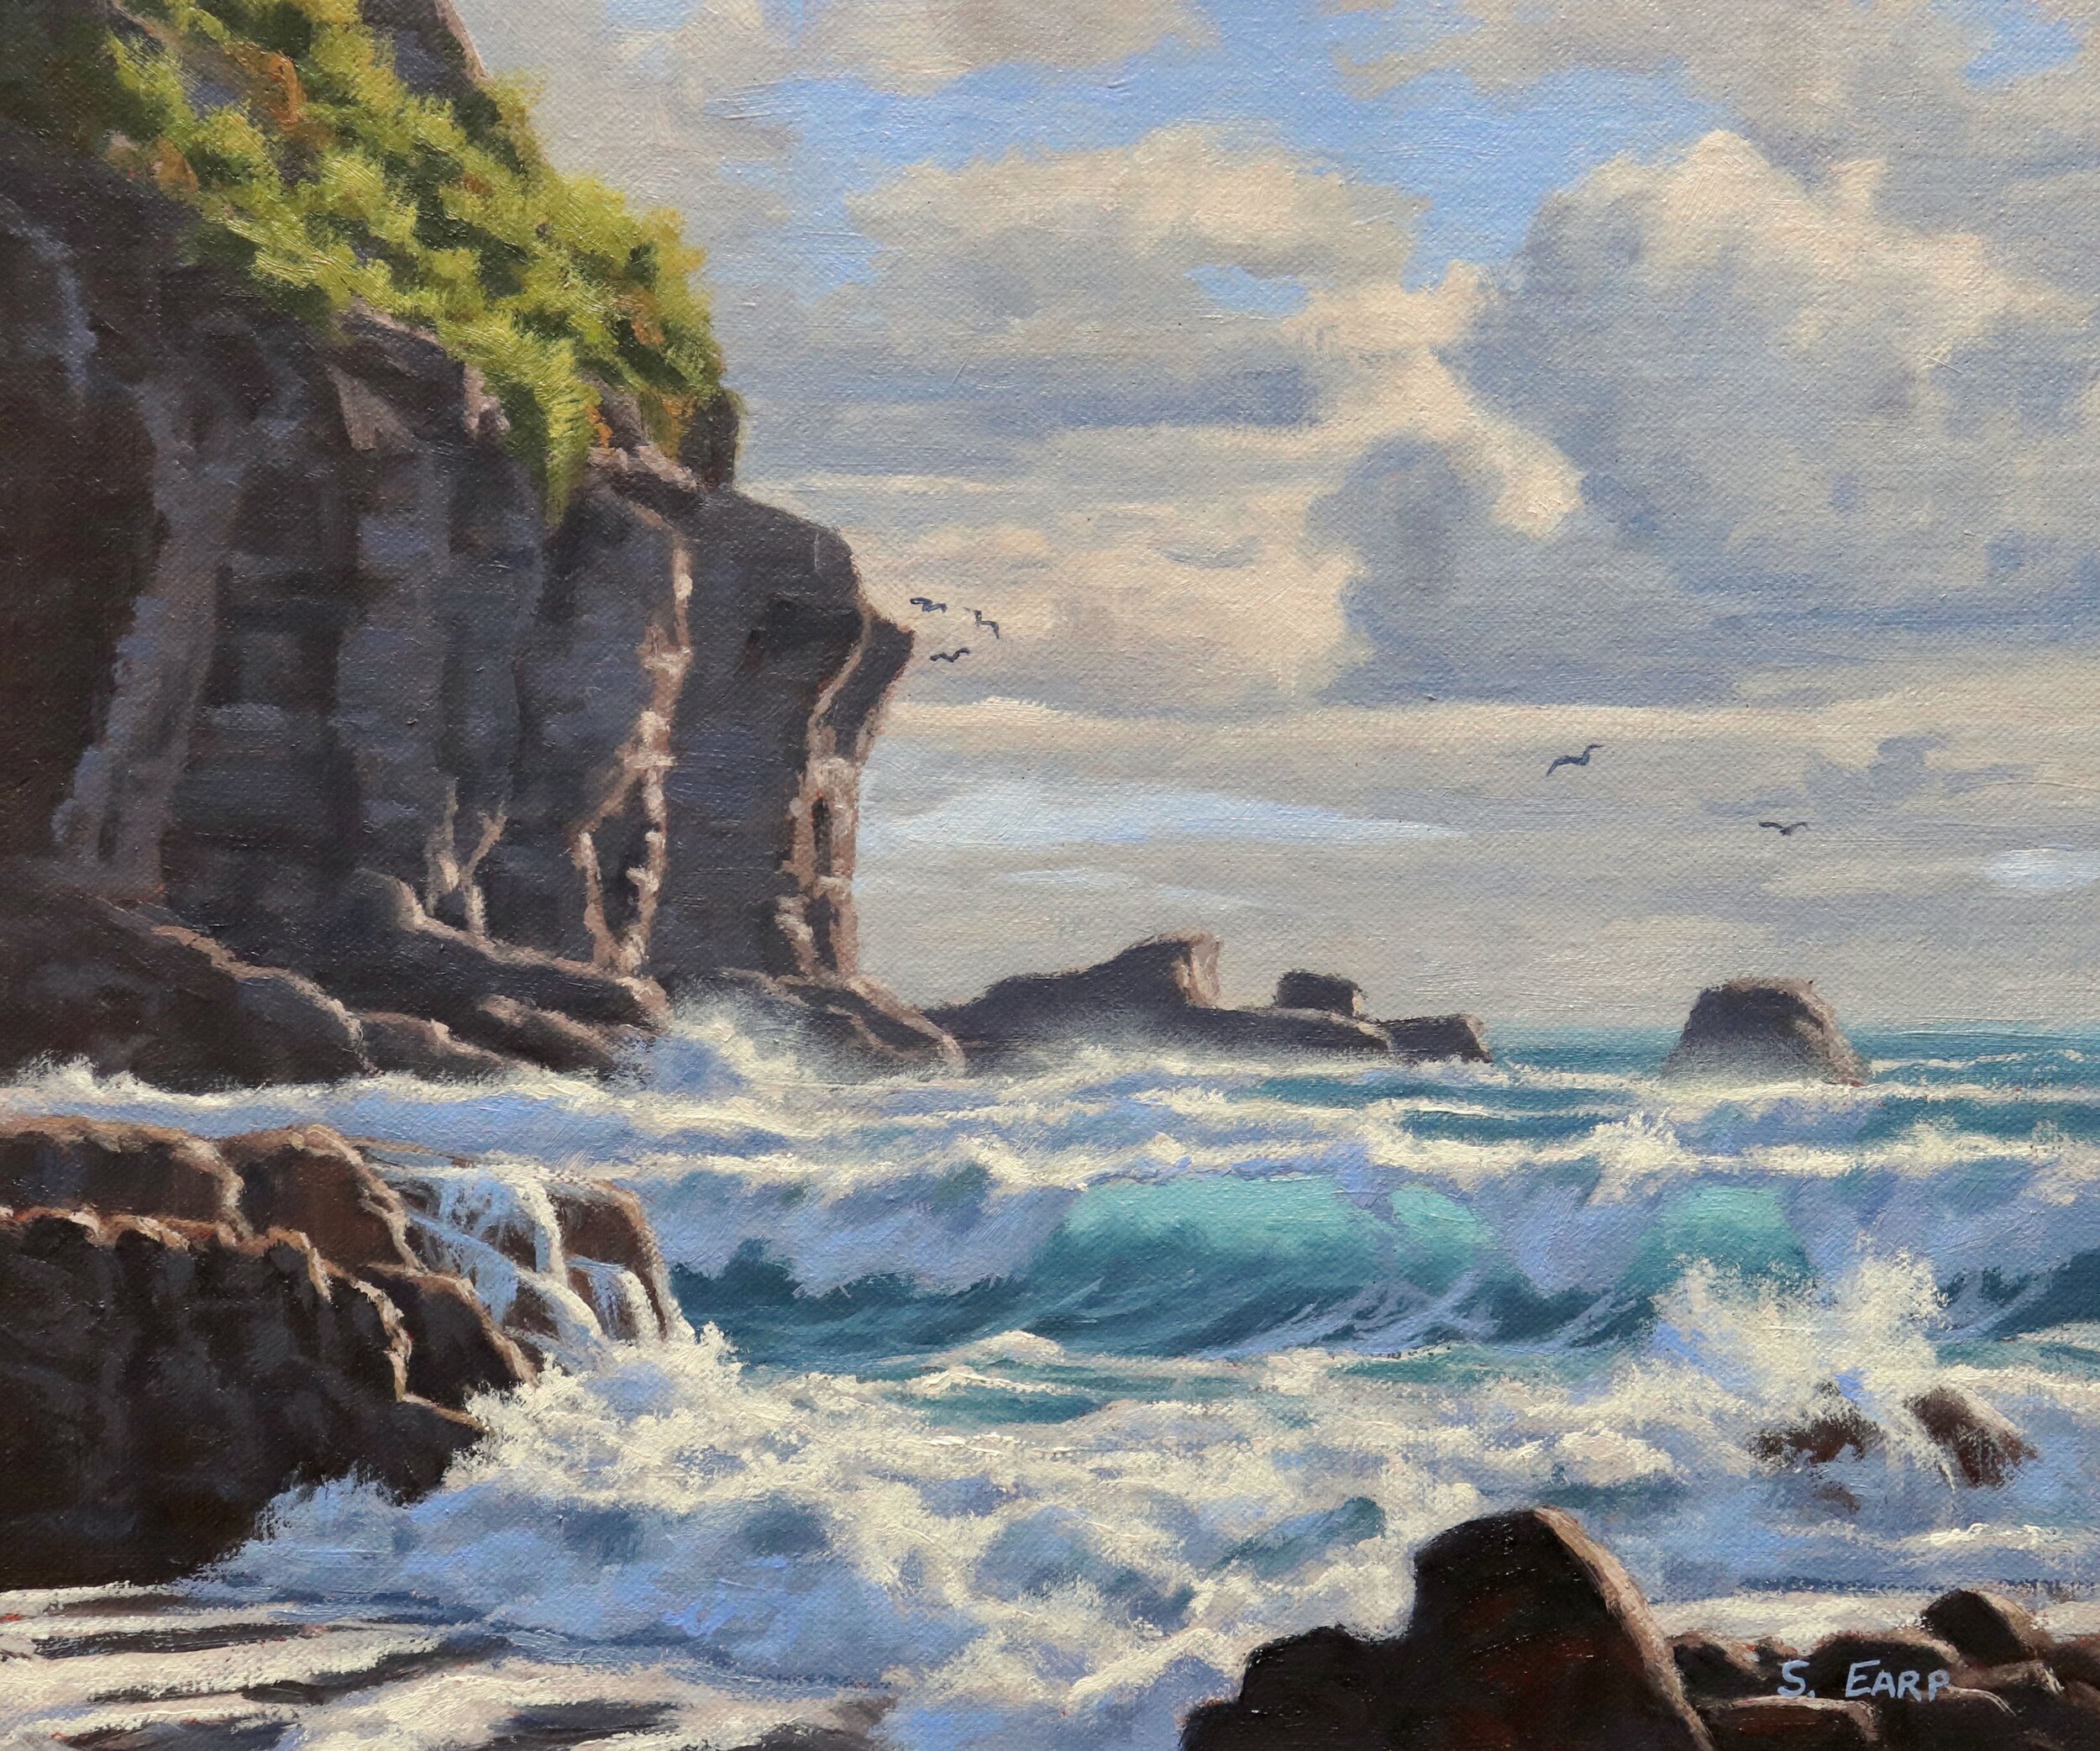 Breaking Waves - Piha - Samuel Earp - oil painting.jpeg